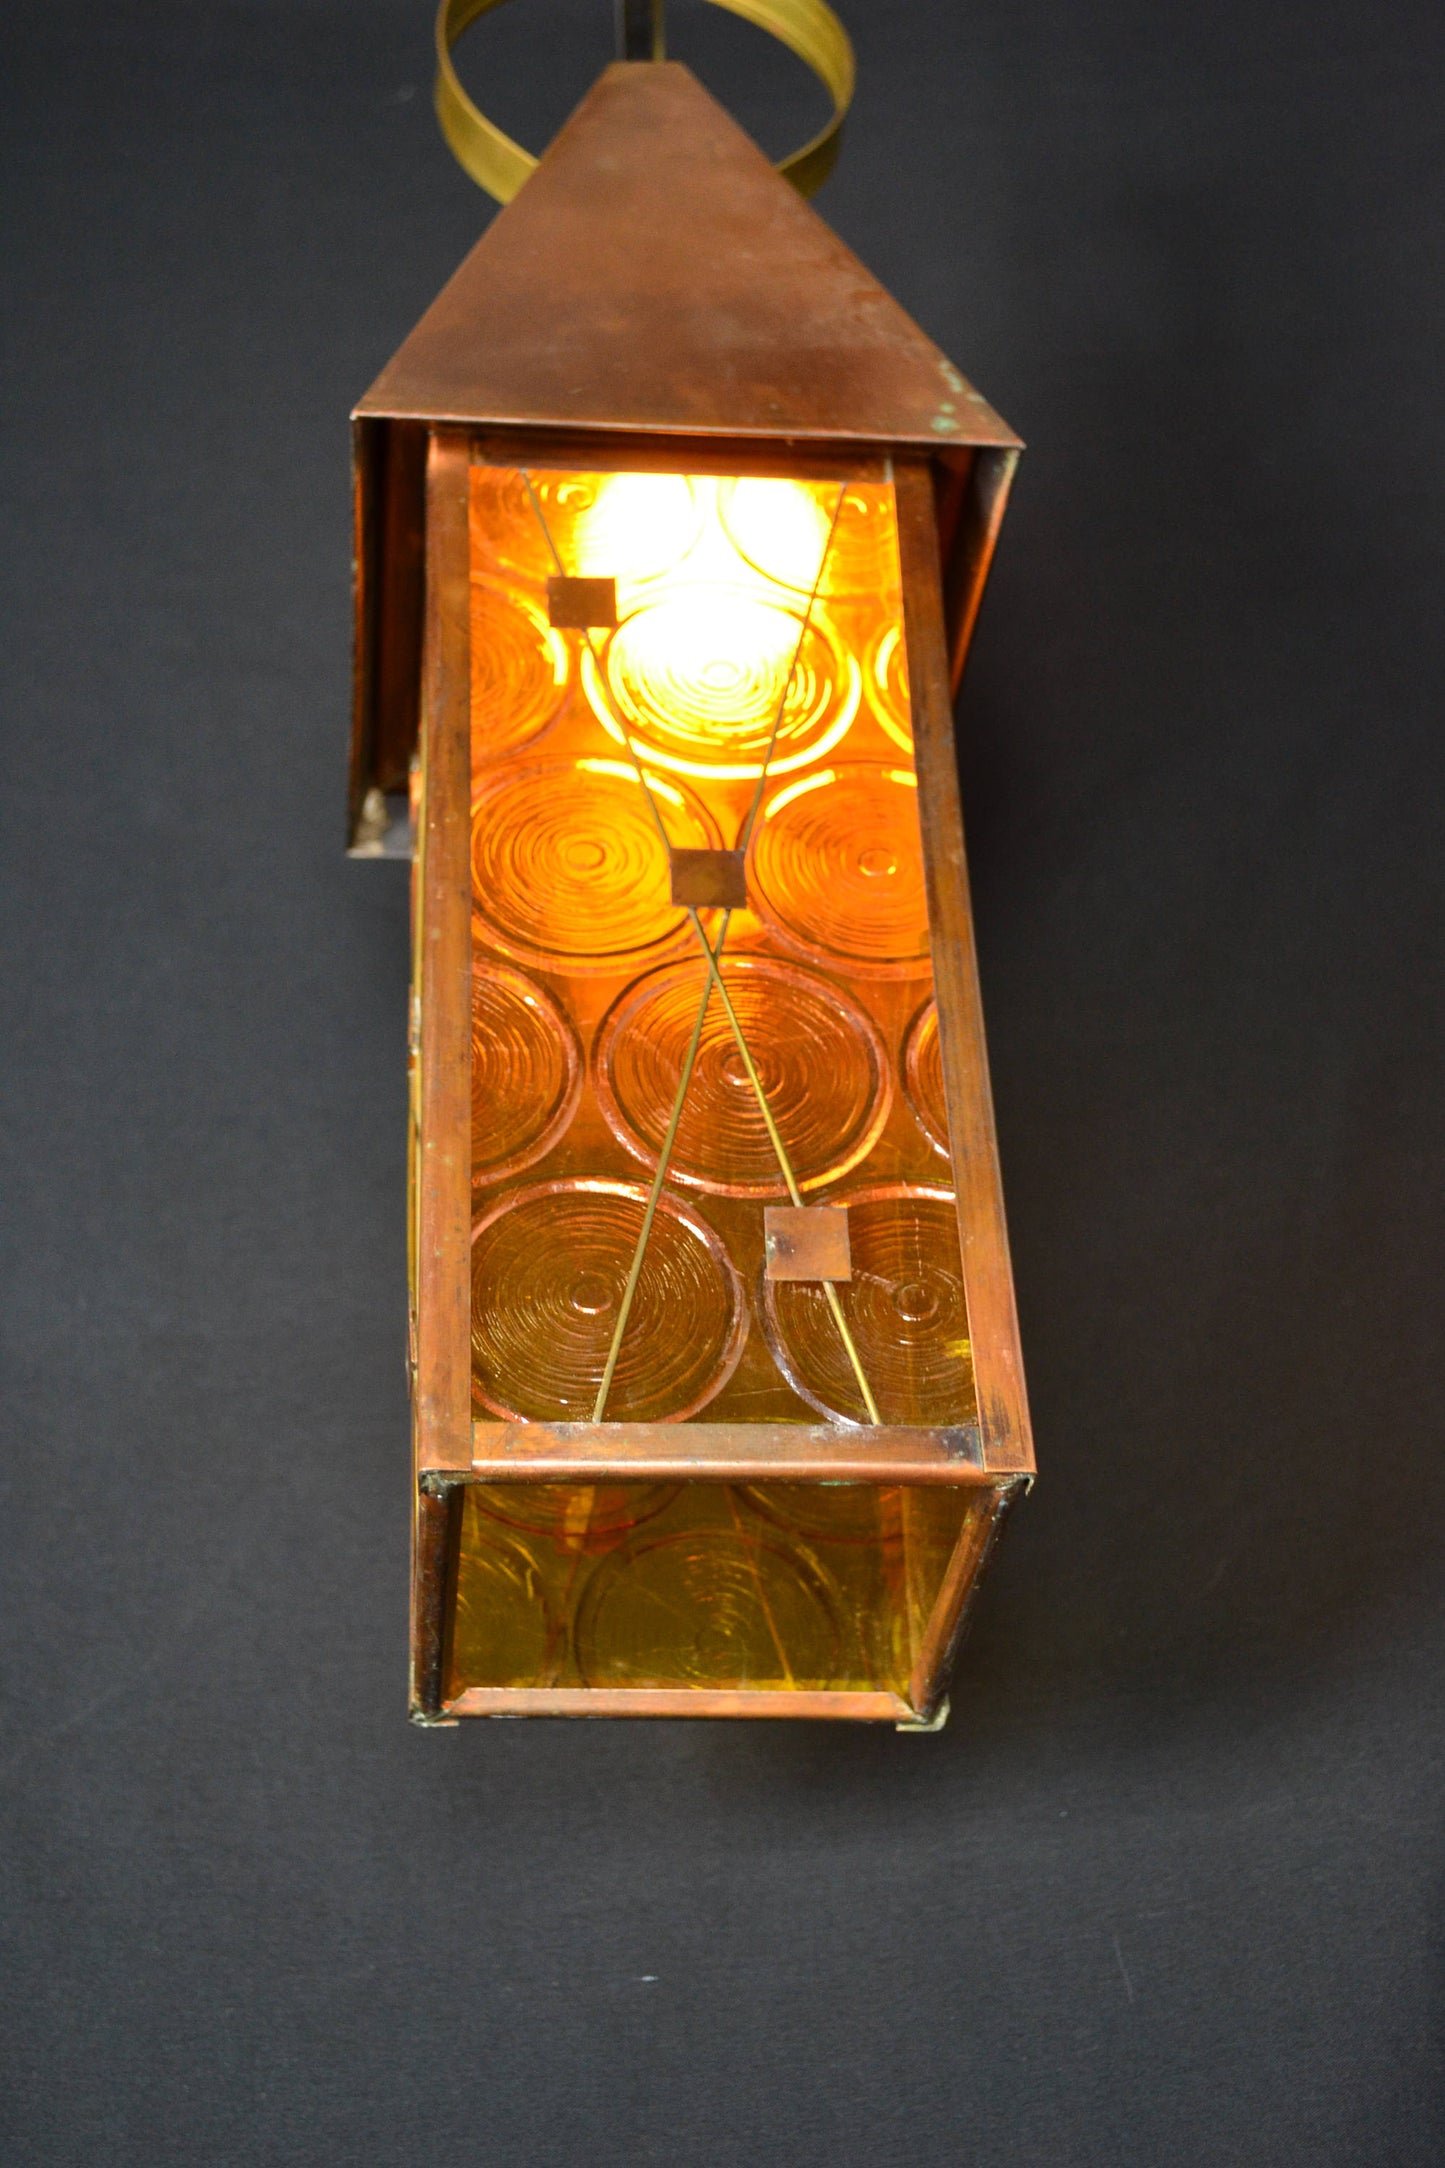 Copper Lantern Pendant Light